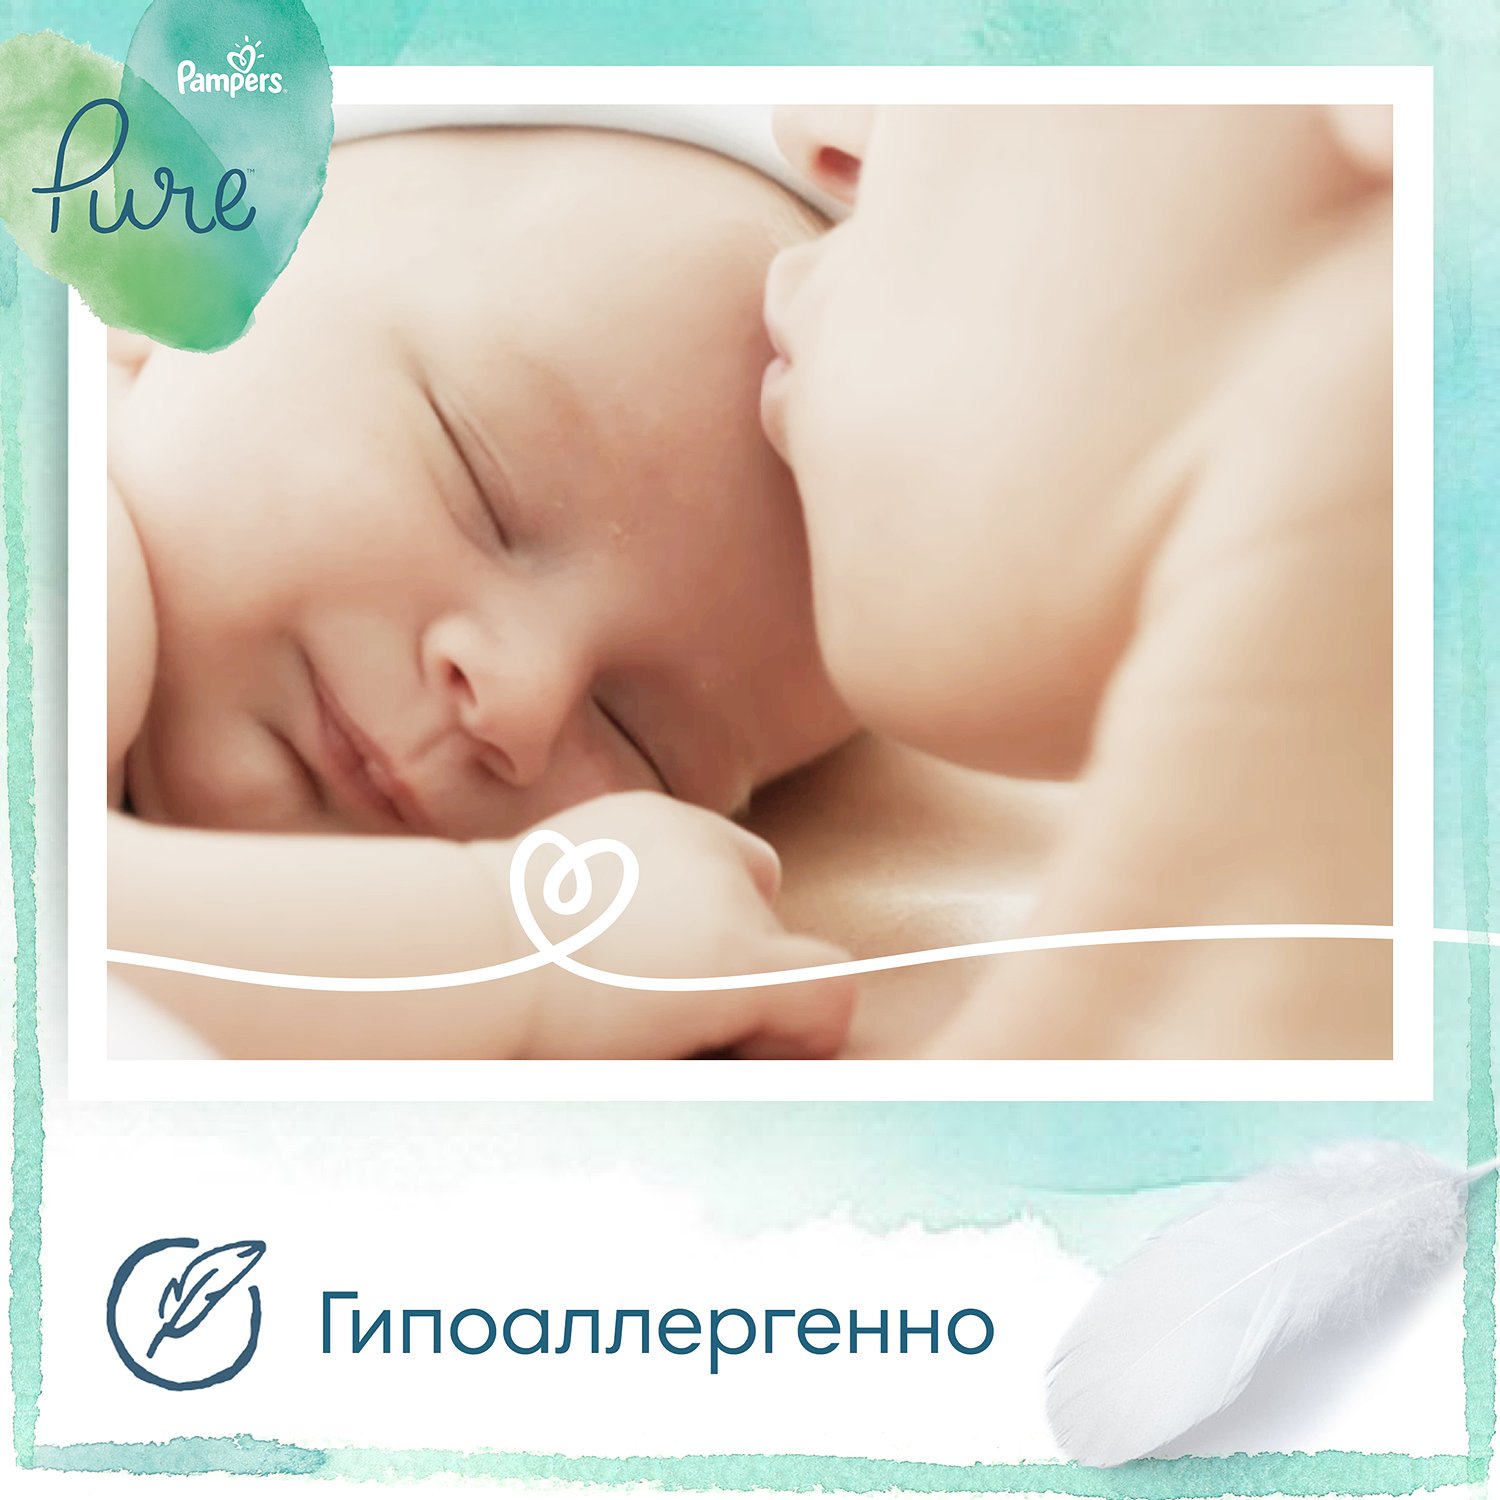 Подгузники Pampers Pure Protection Newborn 2-5кг 50шт